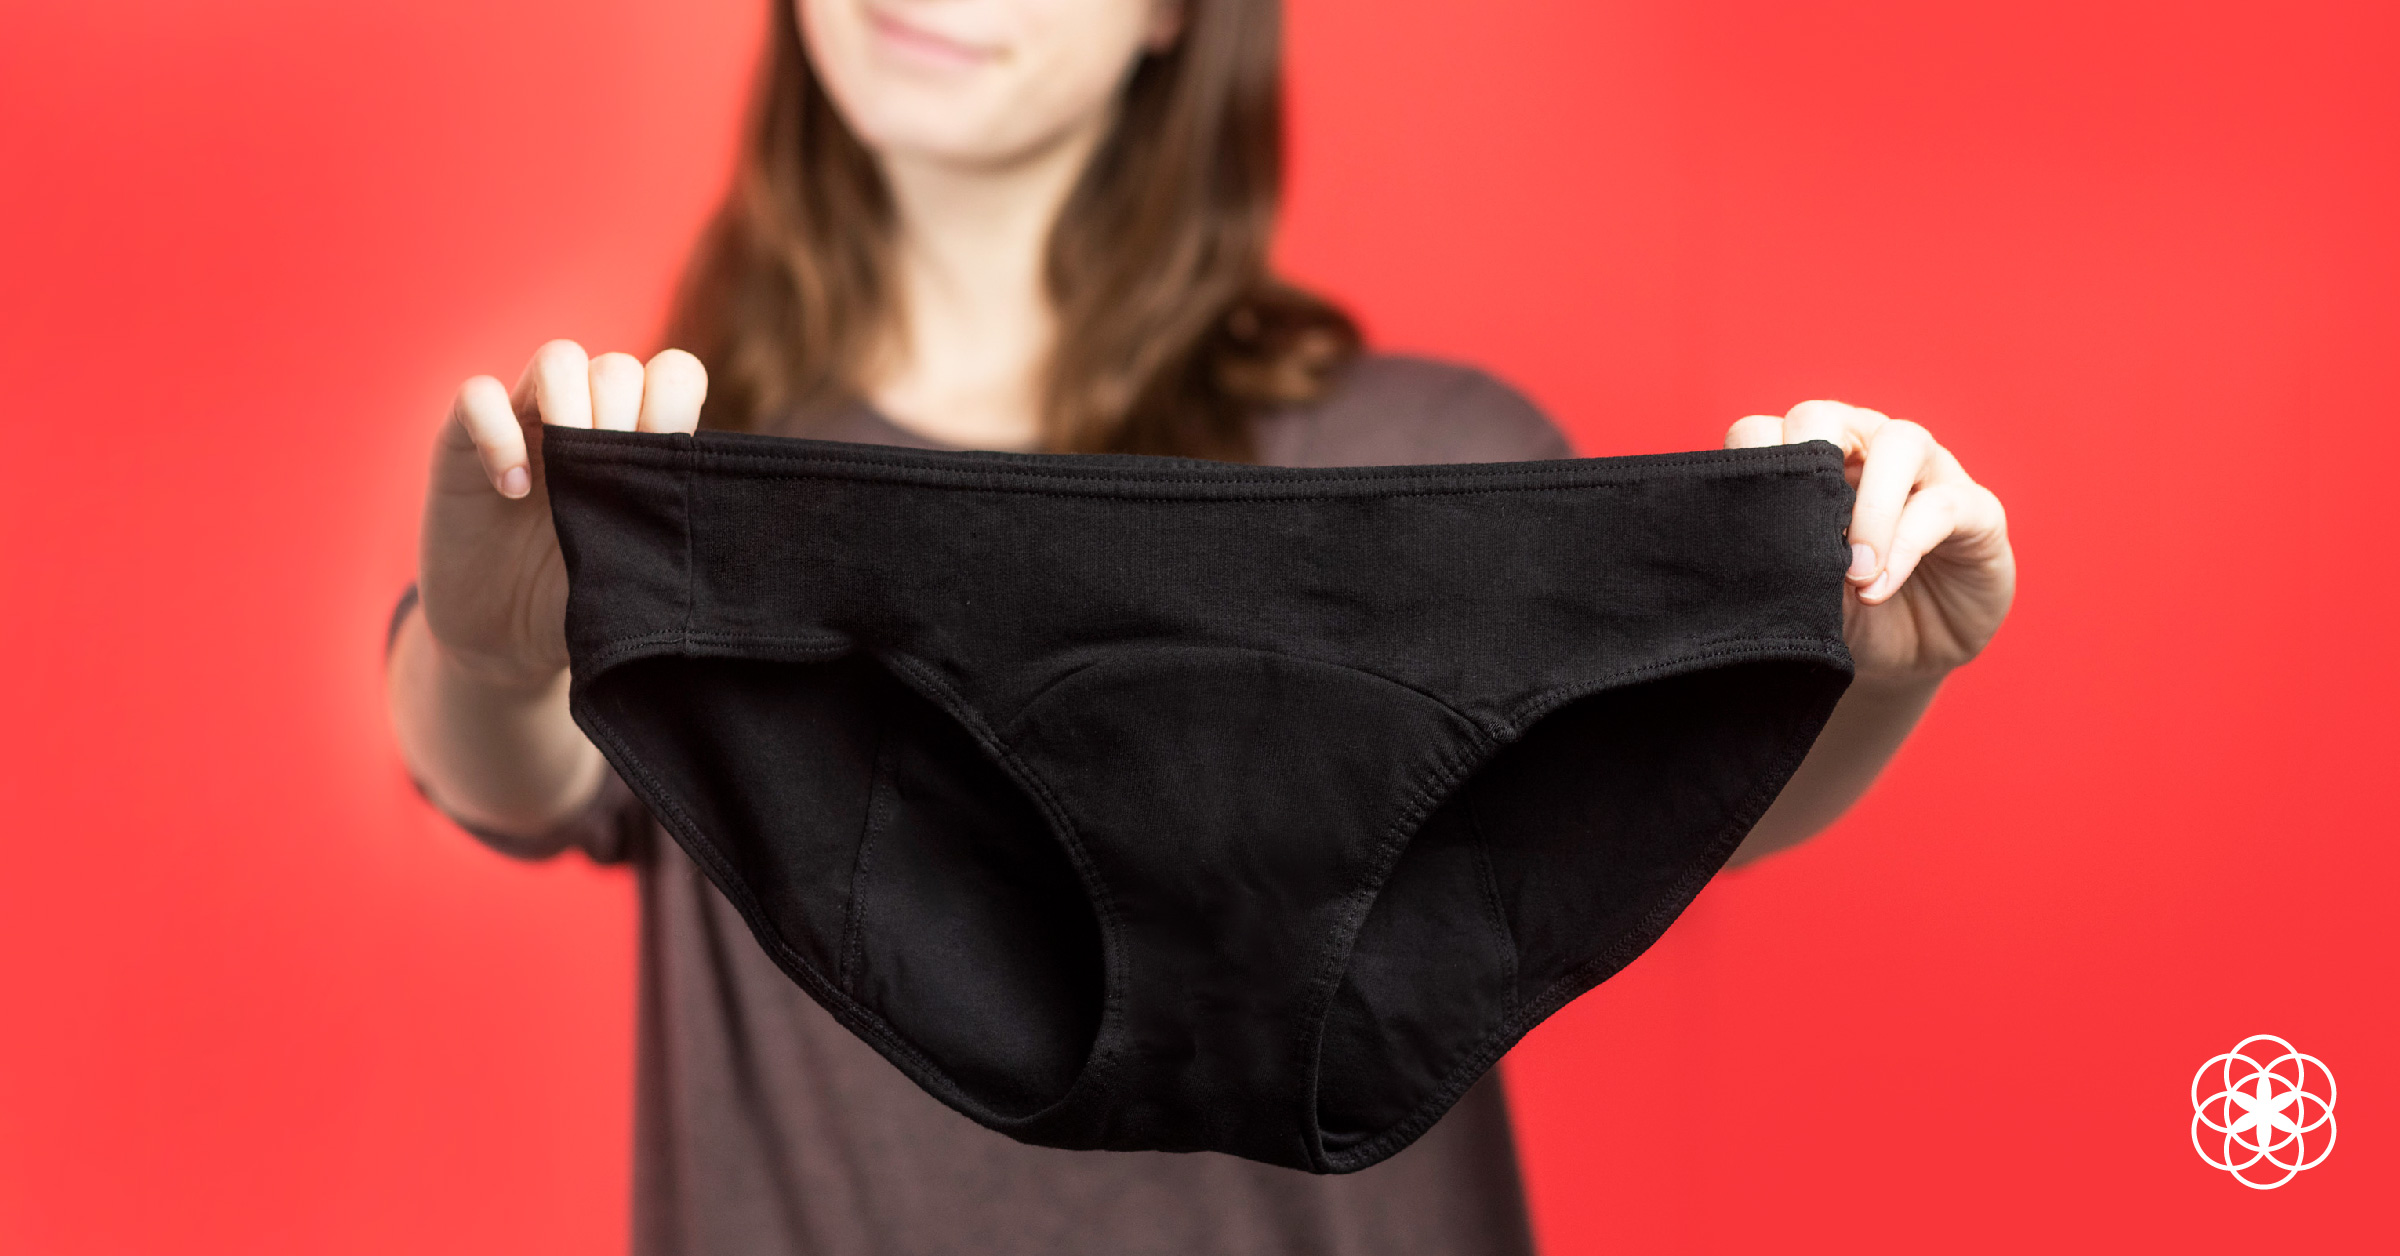 Rael Period Underwear Reviews